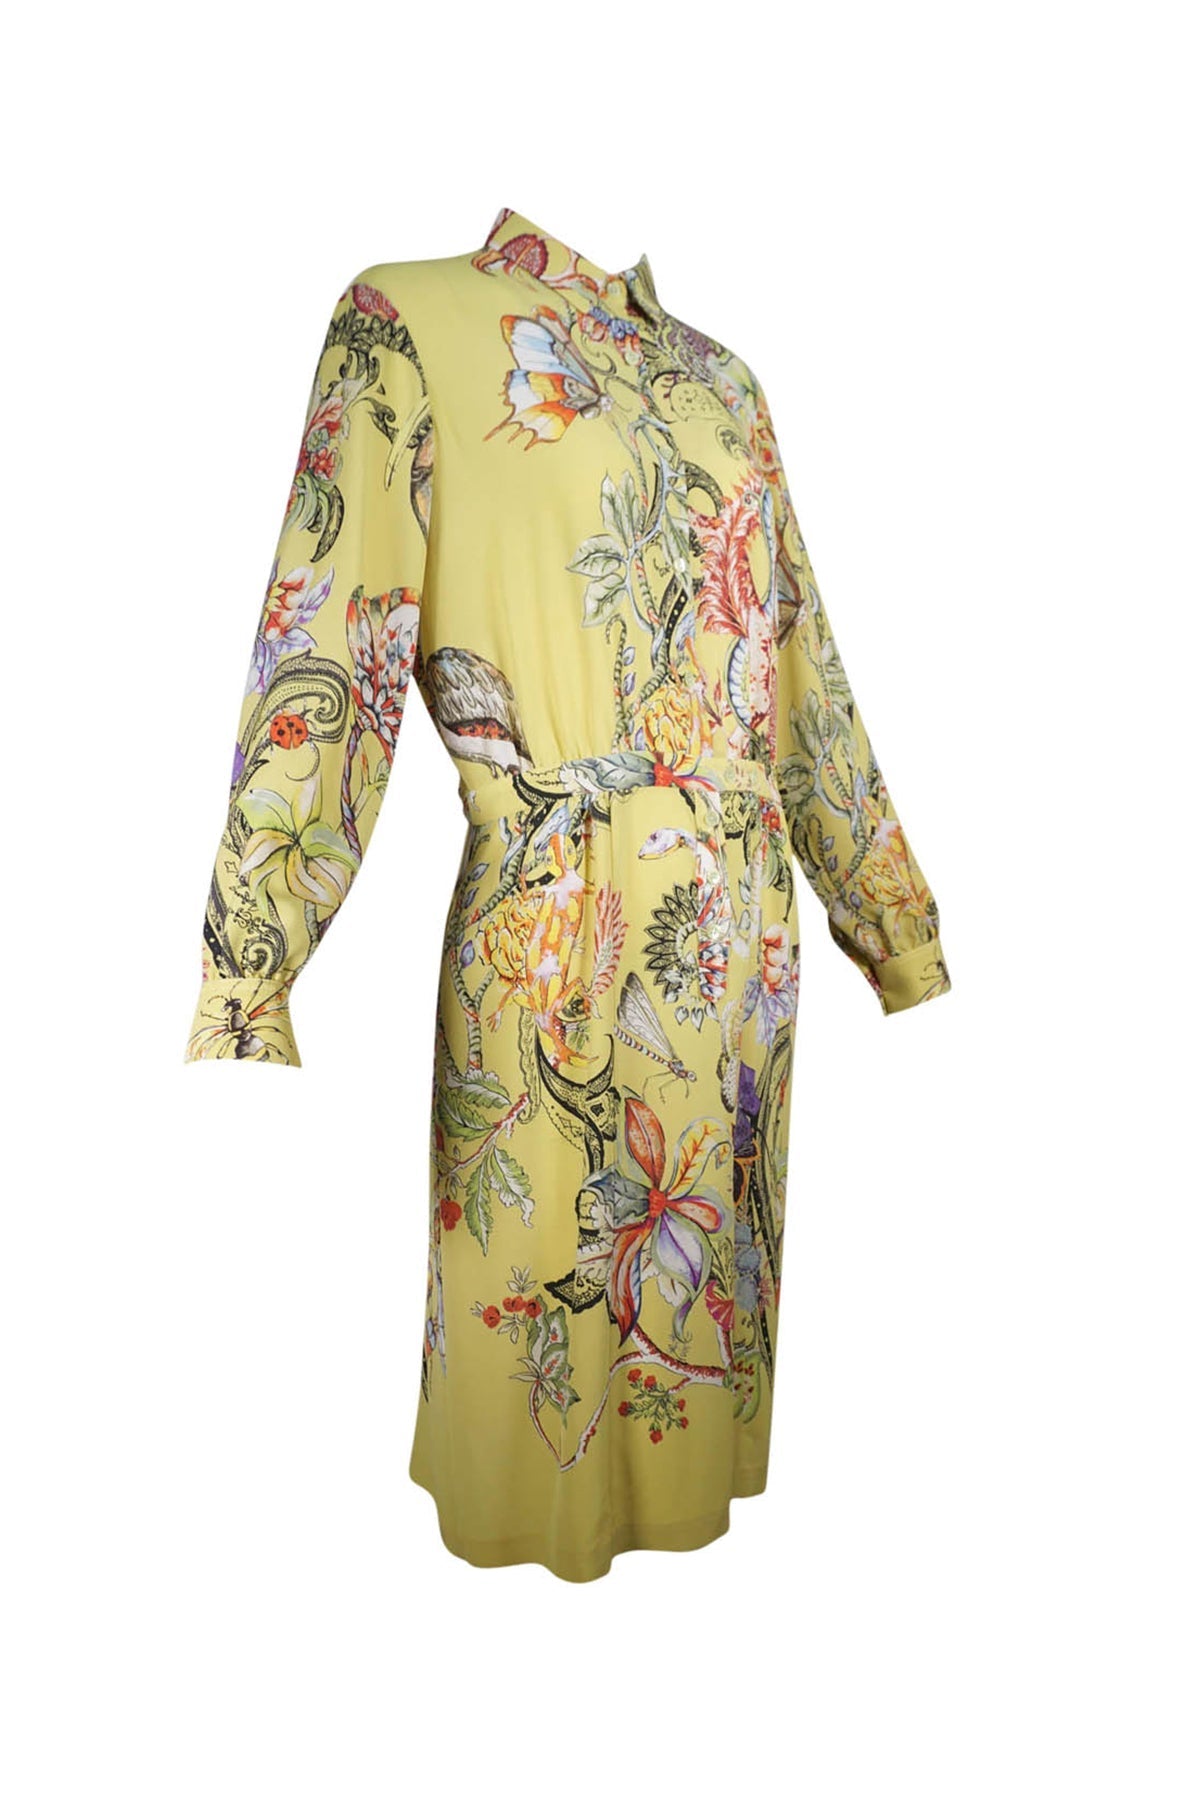 Etro Yellow Silk Print Dress with Australian Wildlife Size 44 / 8 - Foxy Couture Carmel